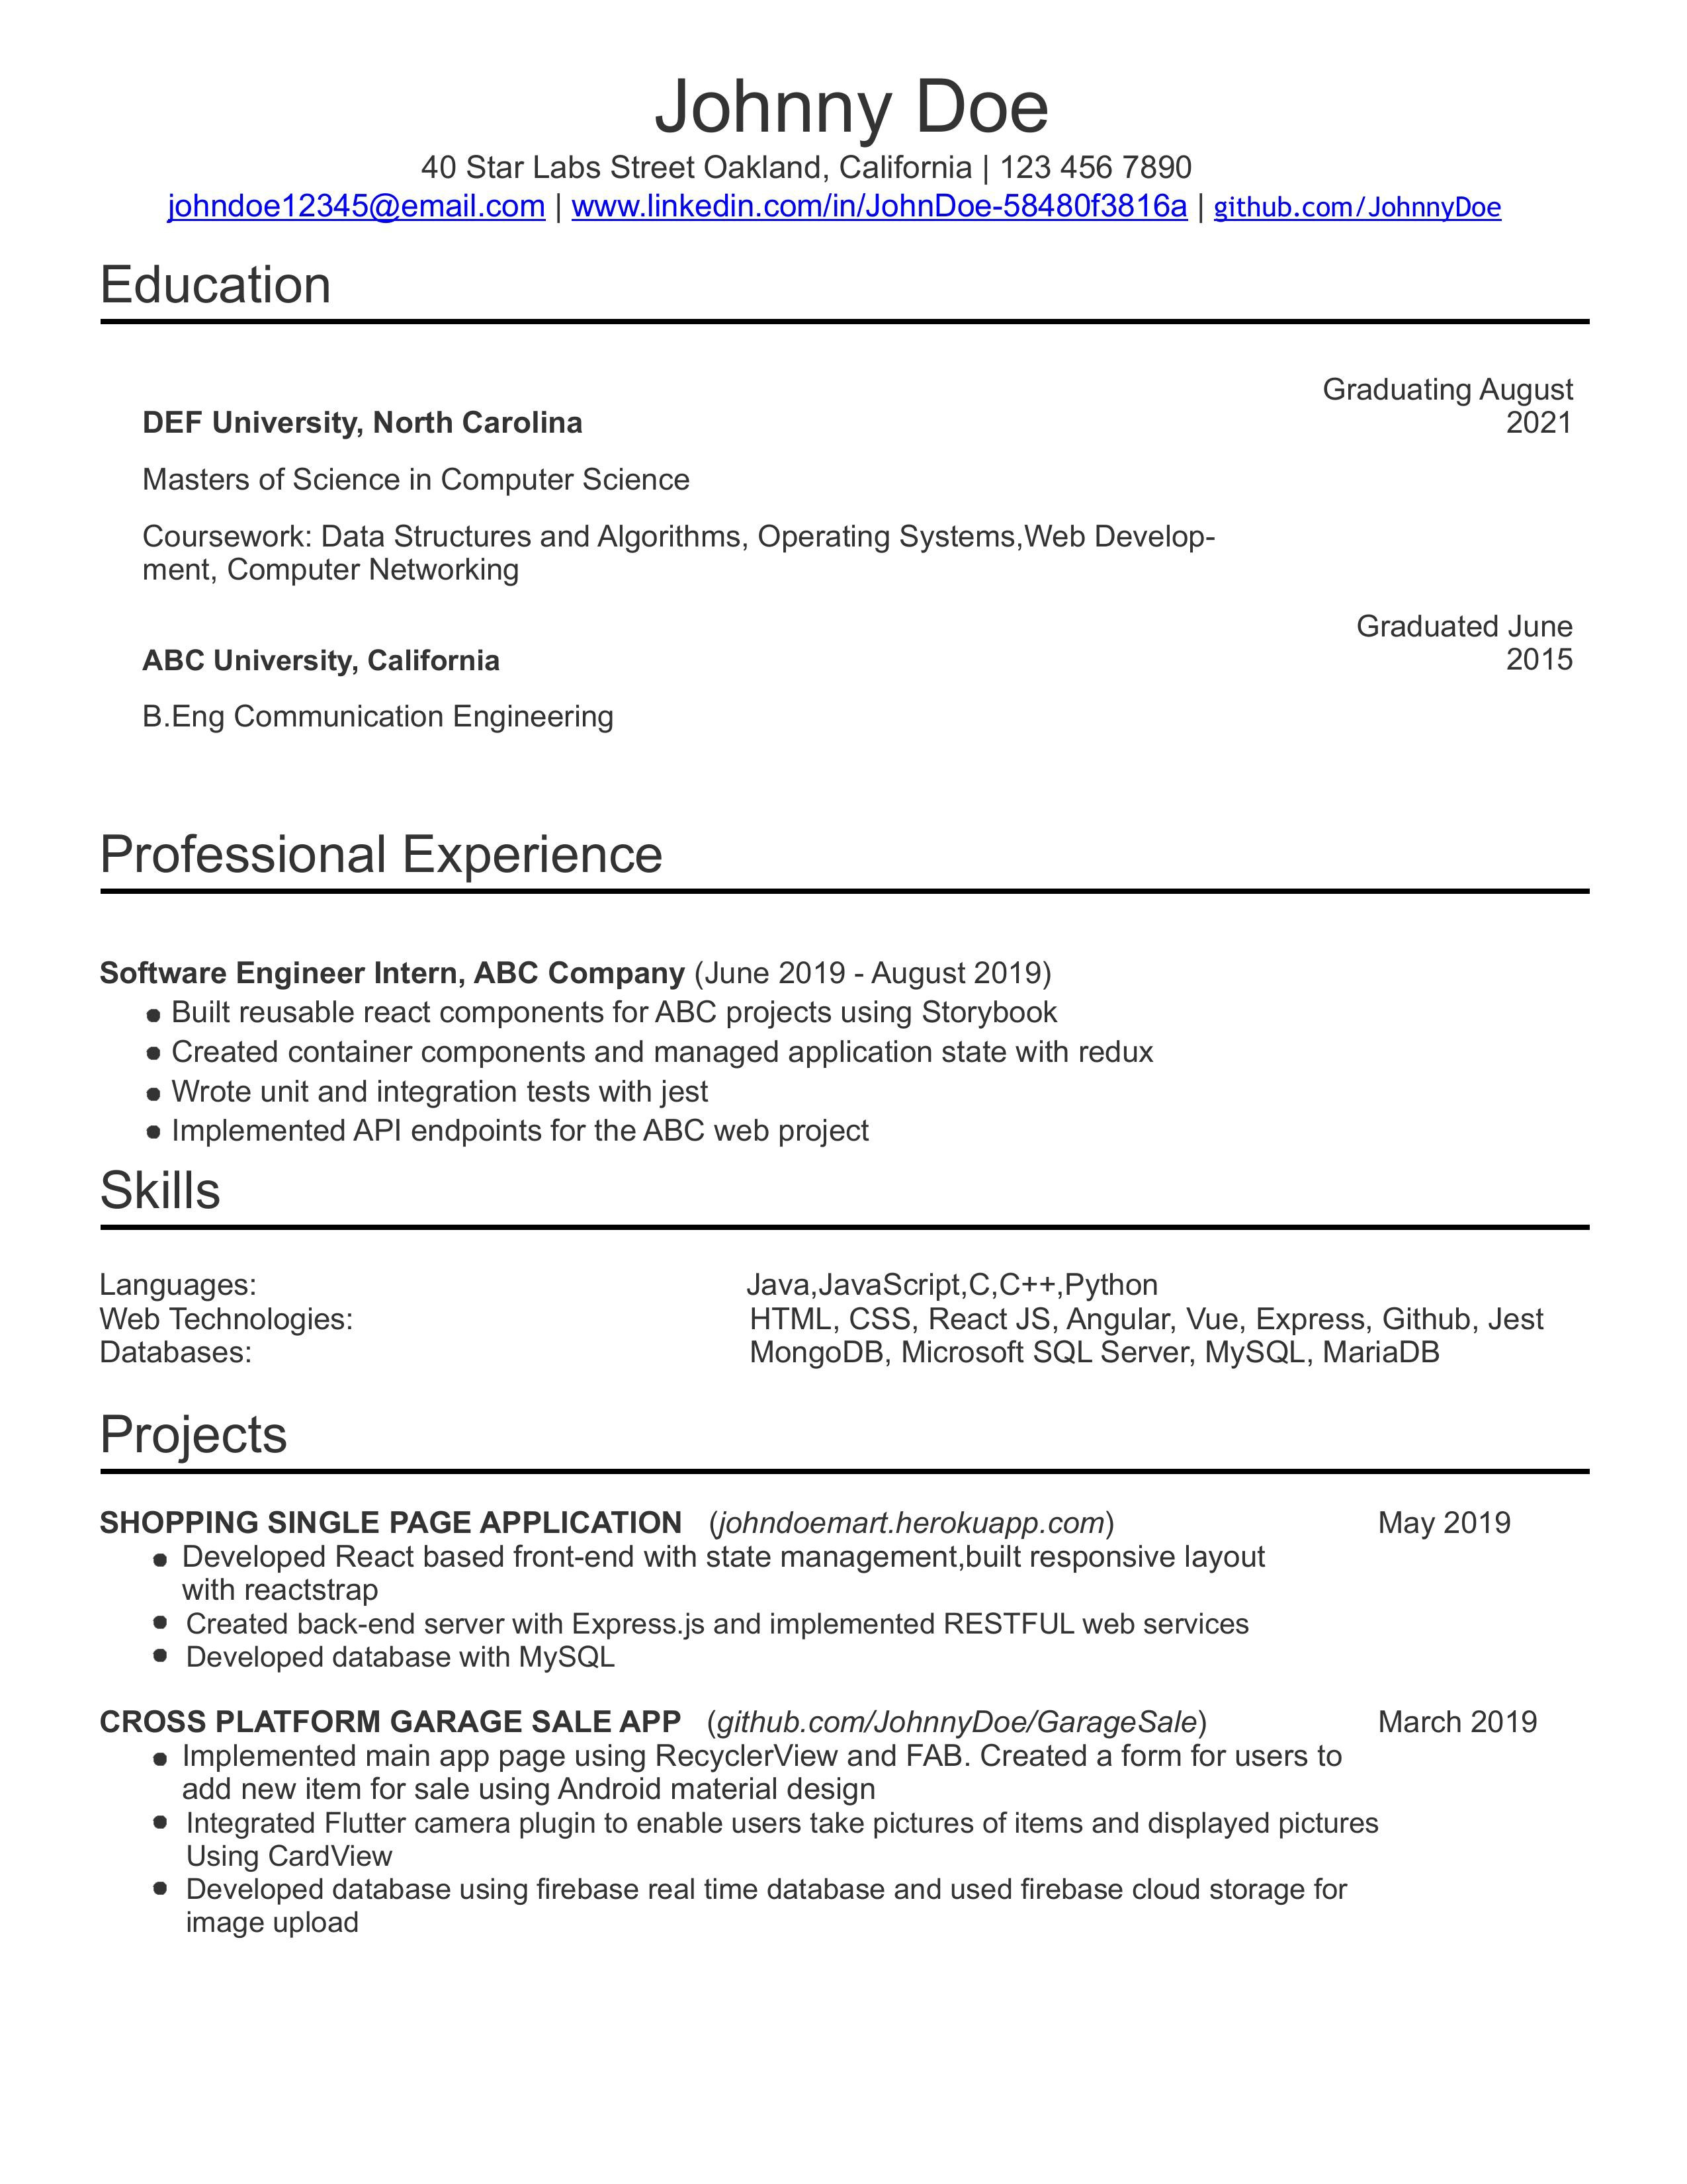 resume6-image.png